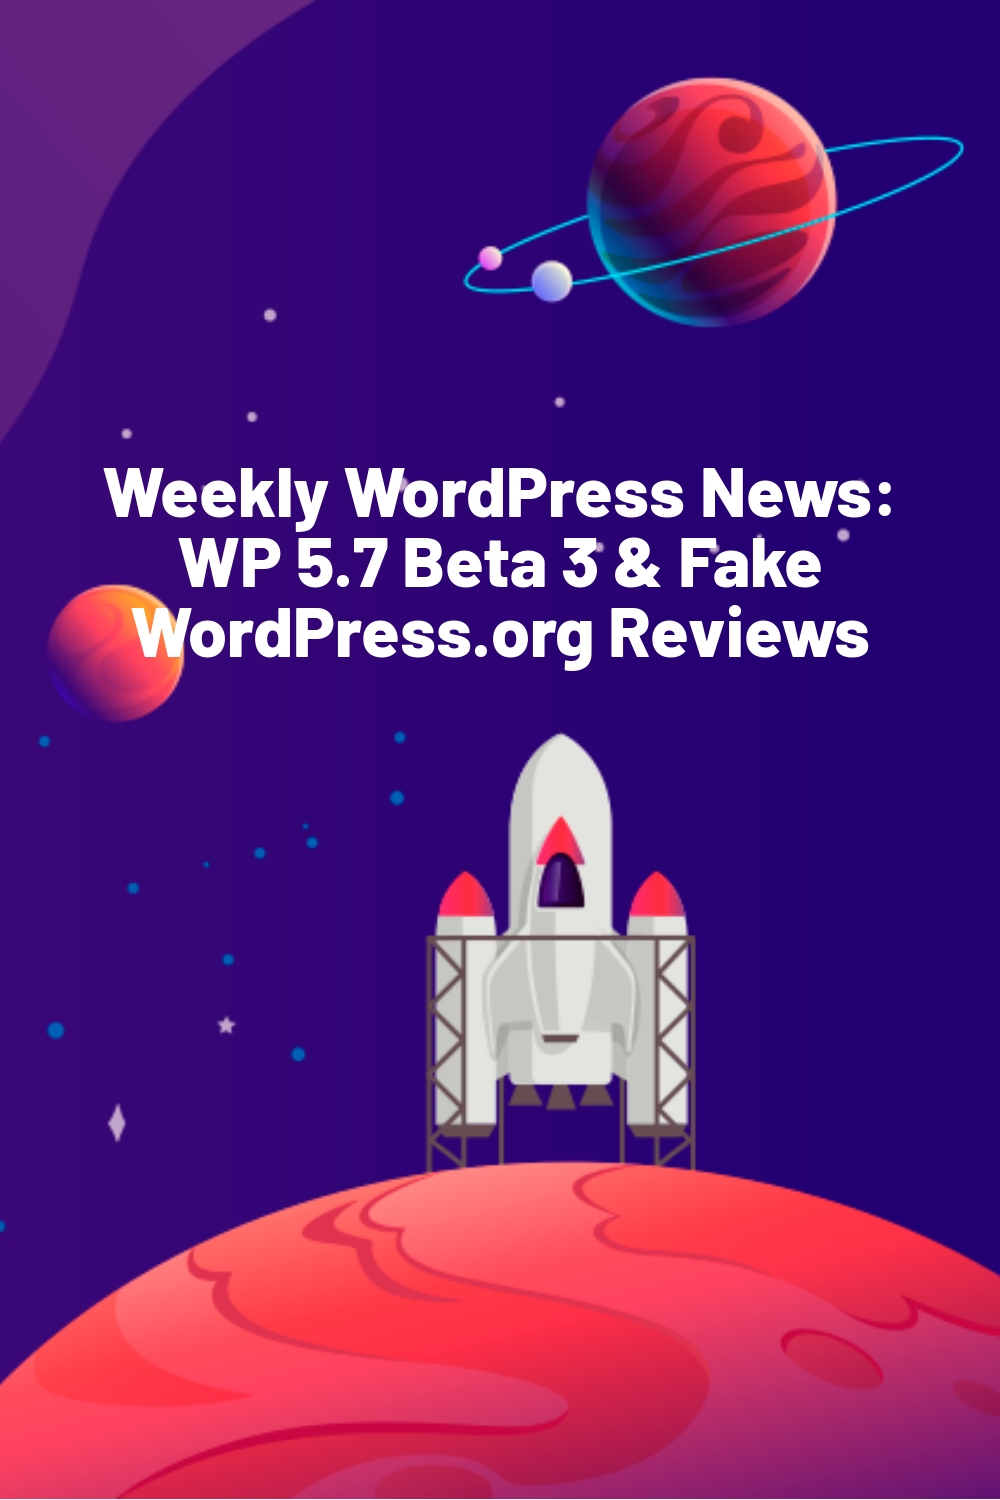 Weekly WordPress News: WP 5.7 Beta 3 & Fake WordPress.org Reviews